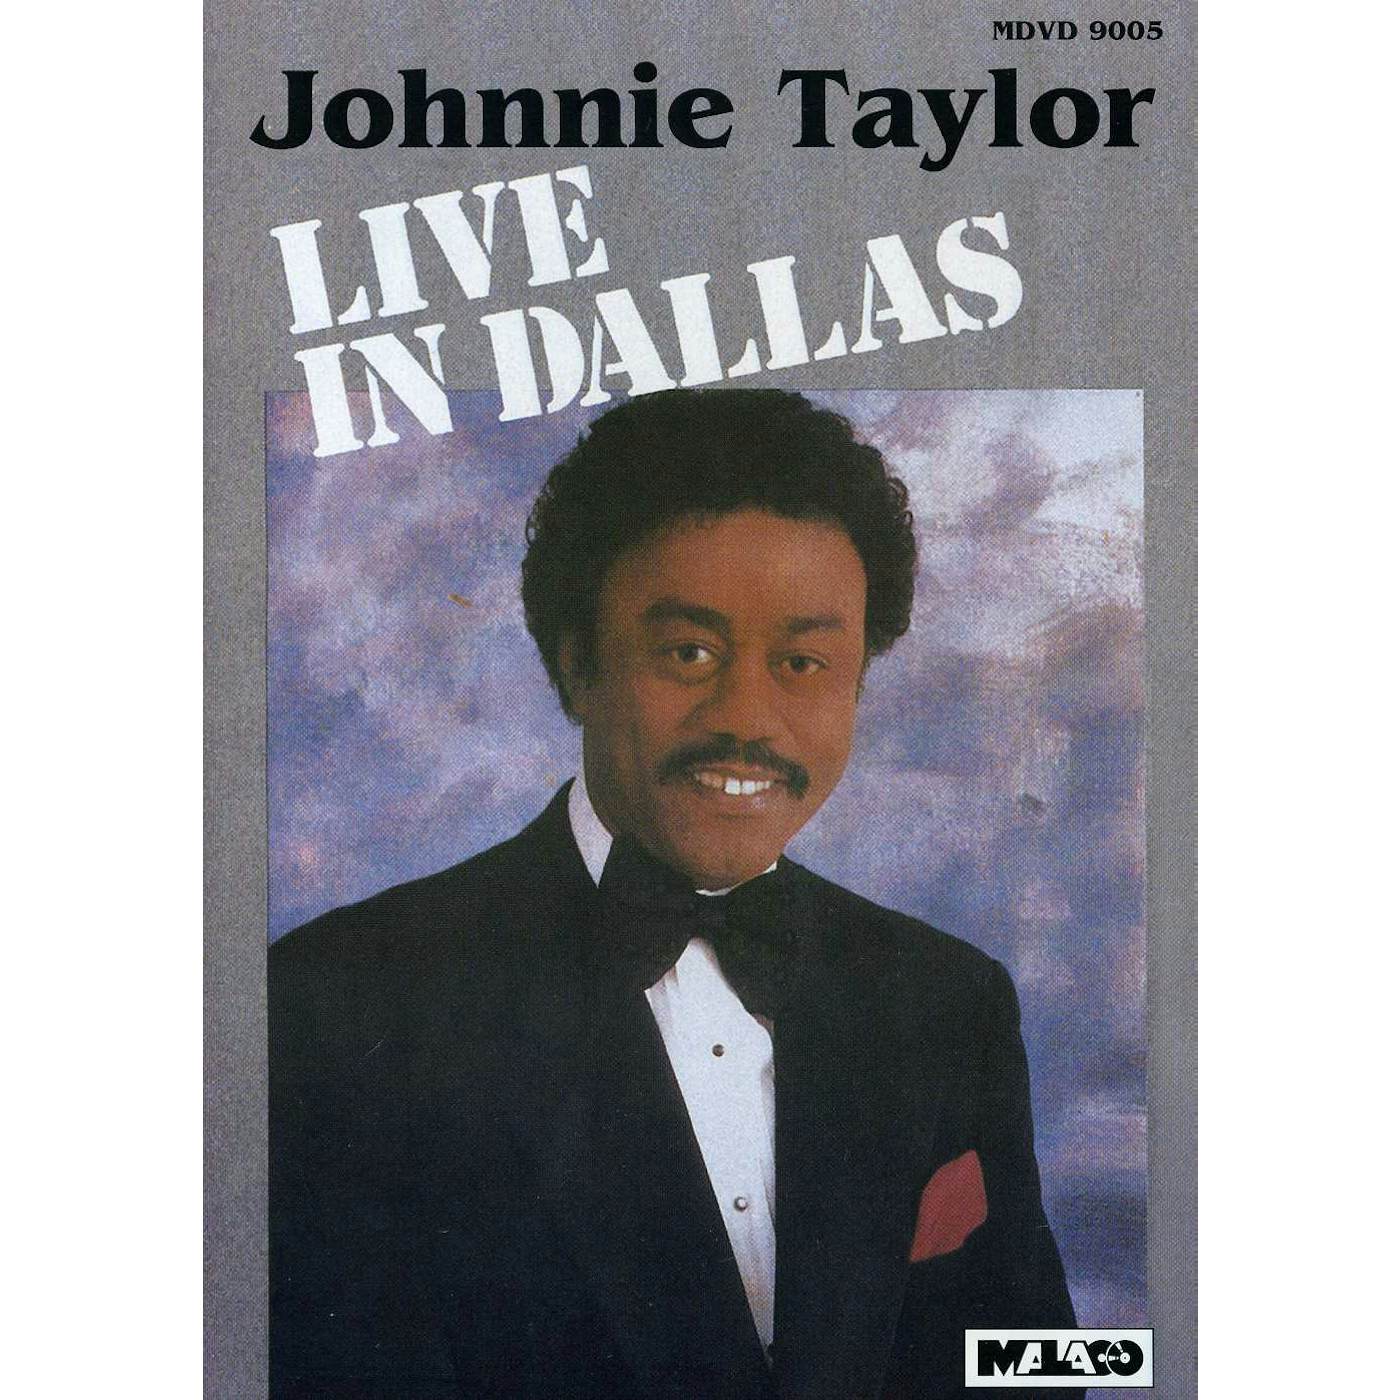 Johnnie Taylor LIVE AT DALLAS DVD